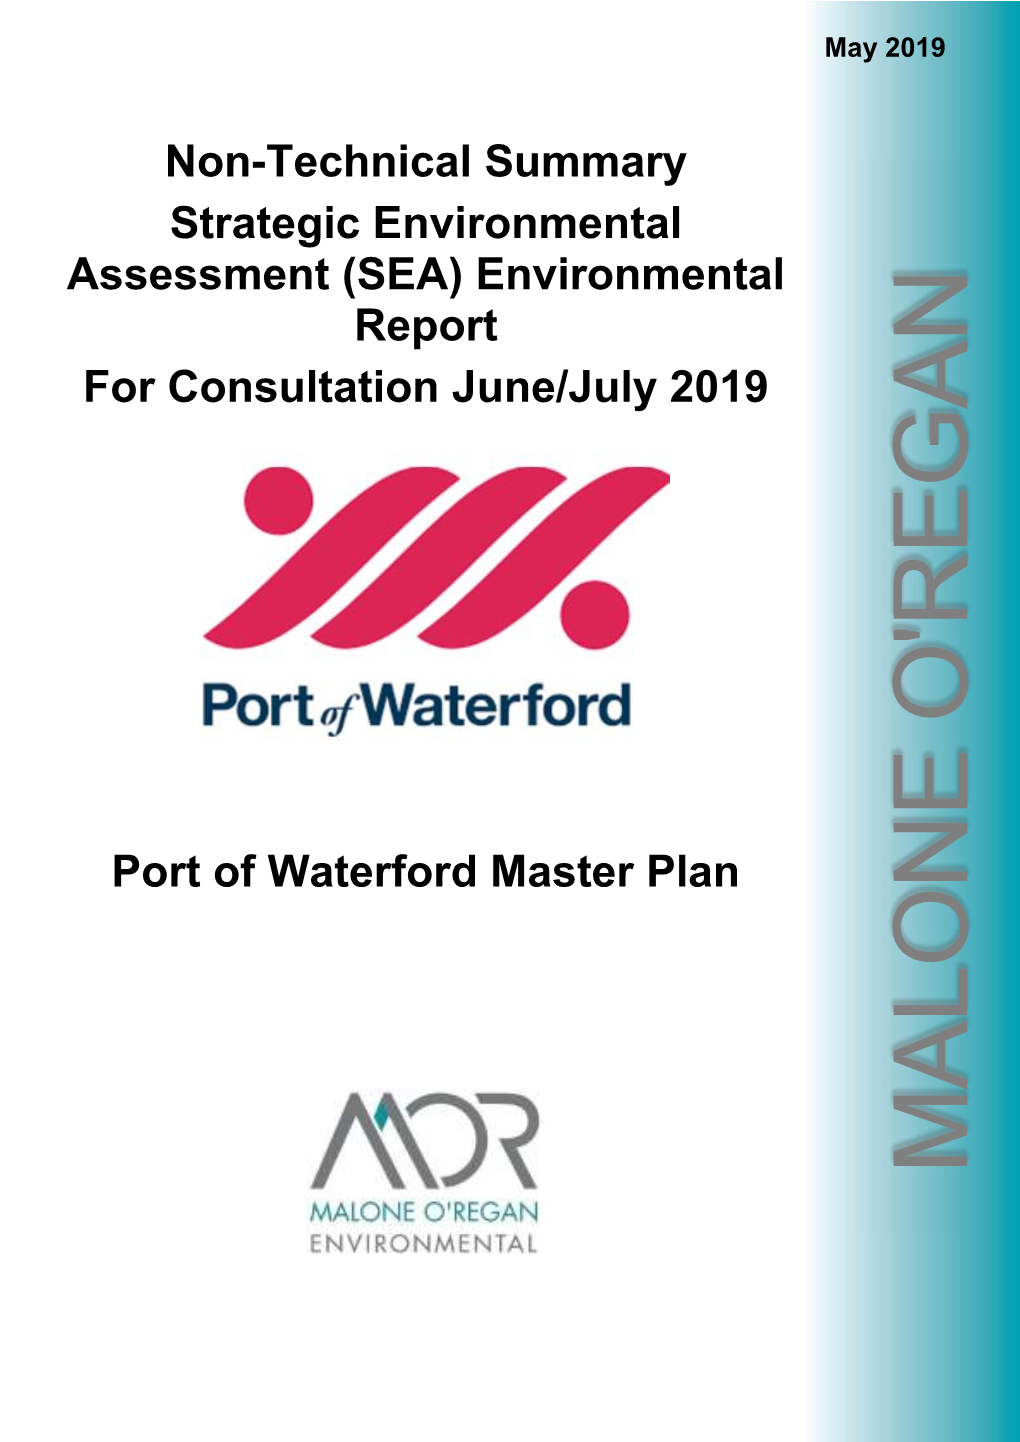 Non-Technical Summary Strategic Environmental Assessment (SEA) Environmental